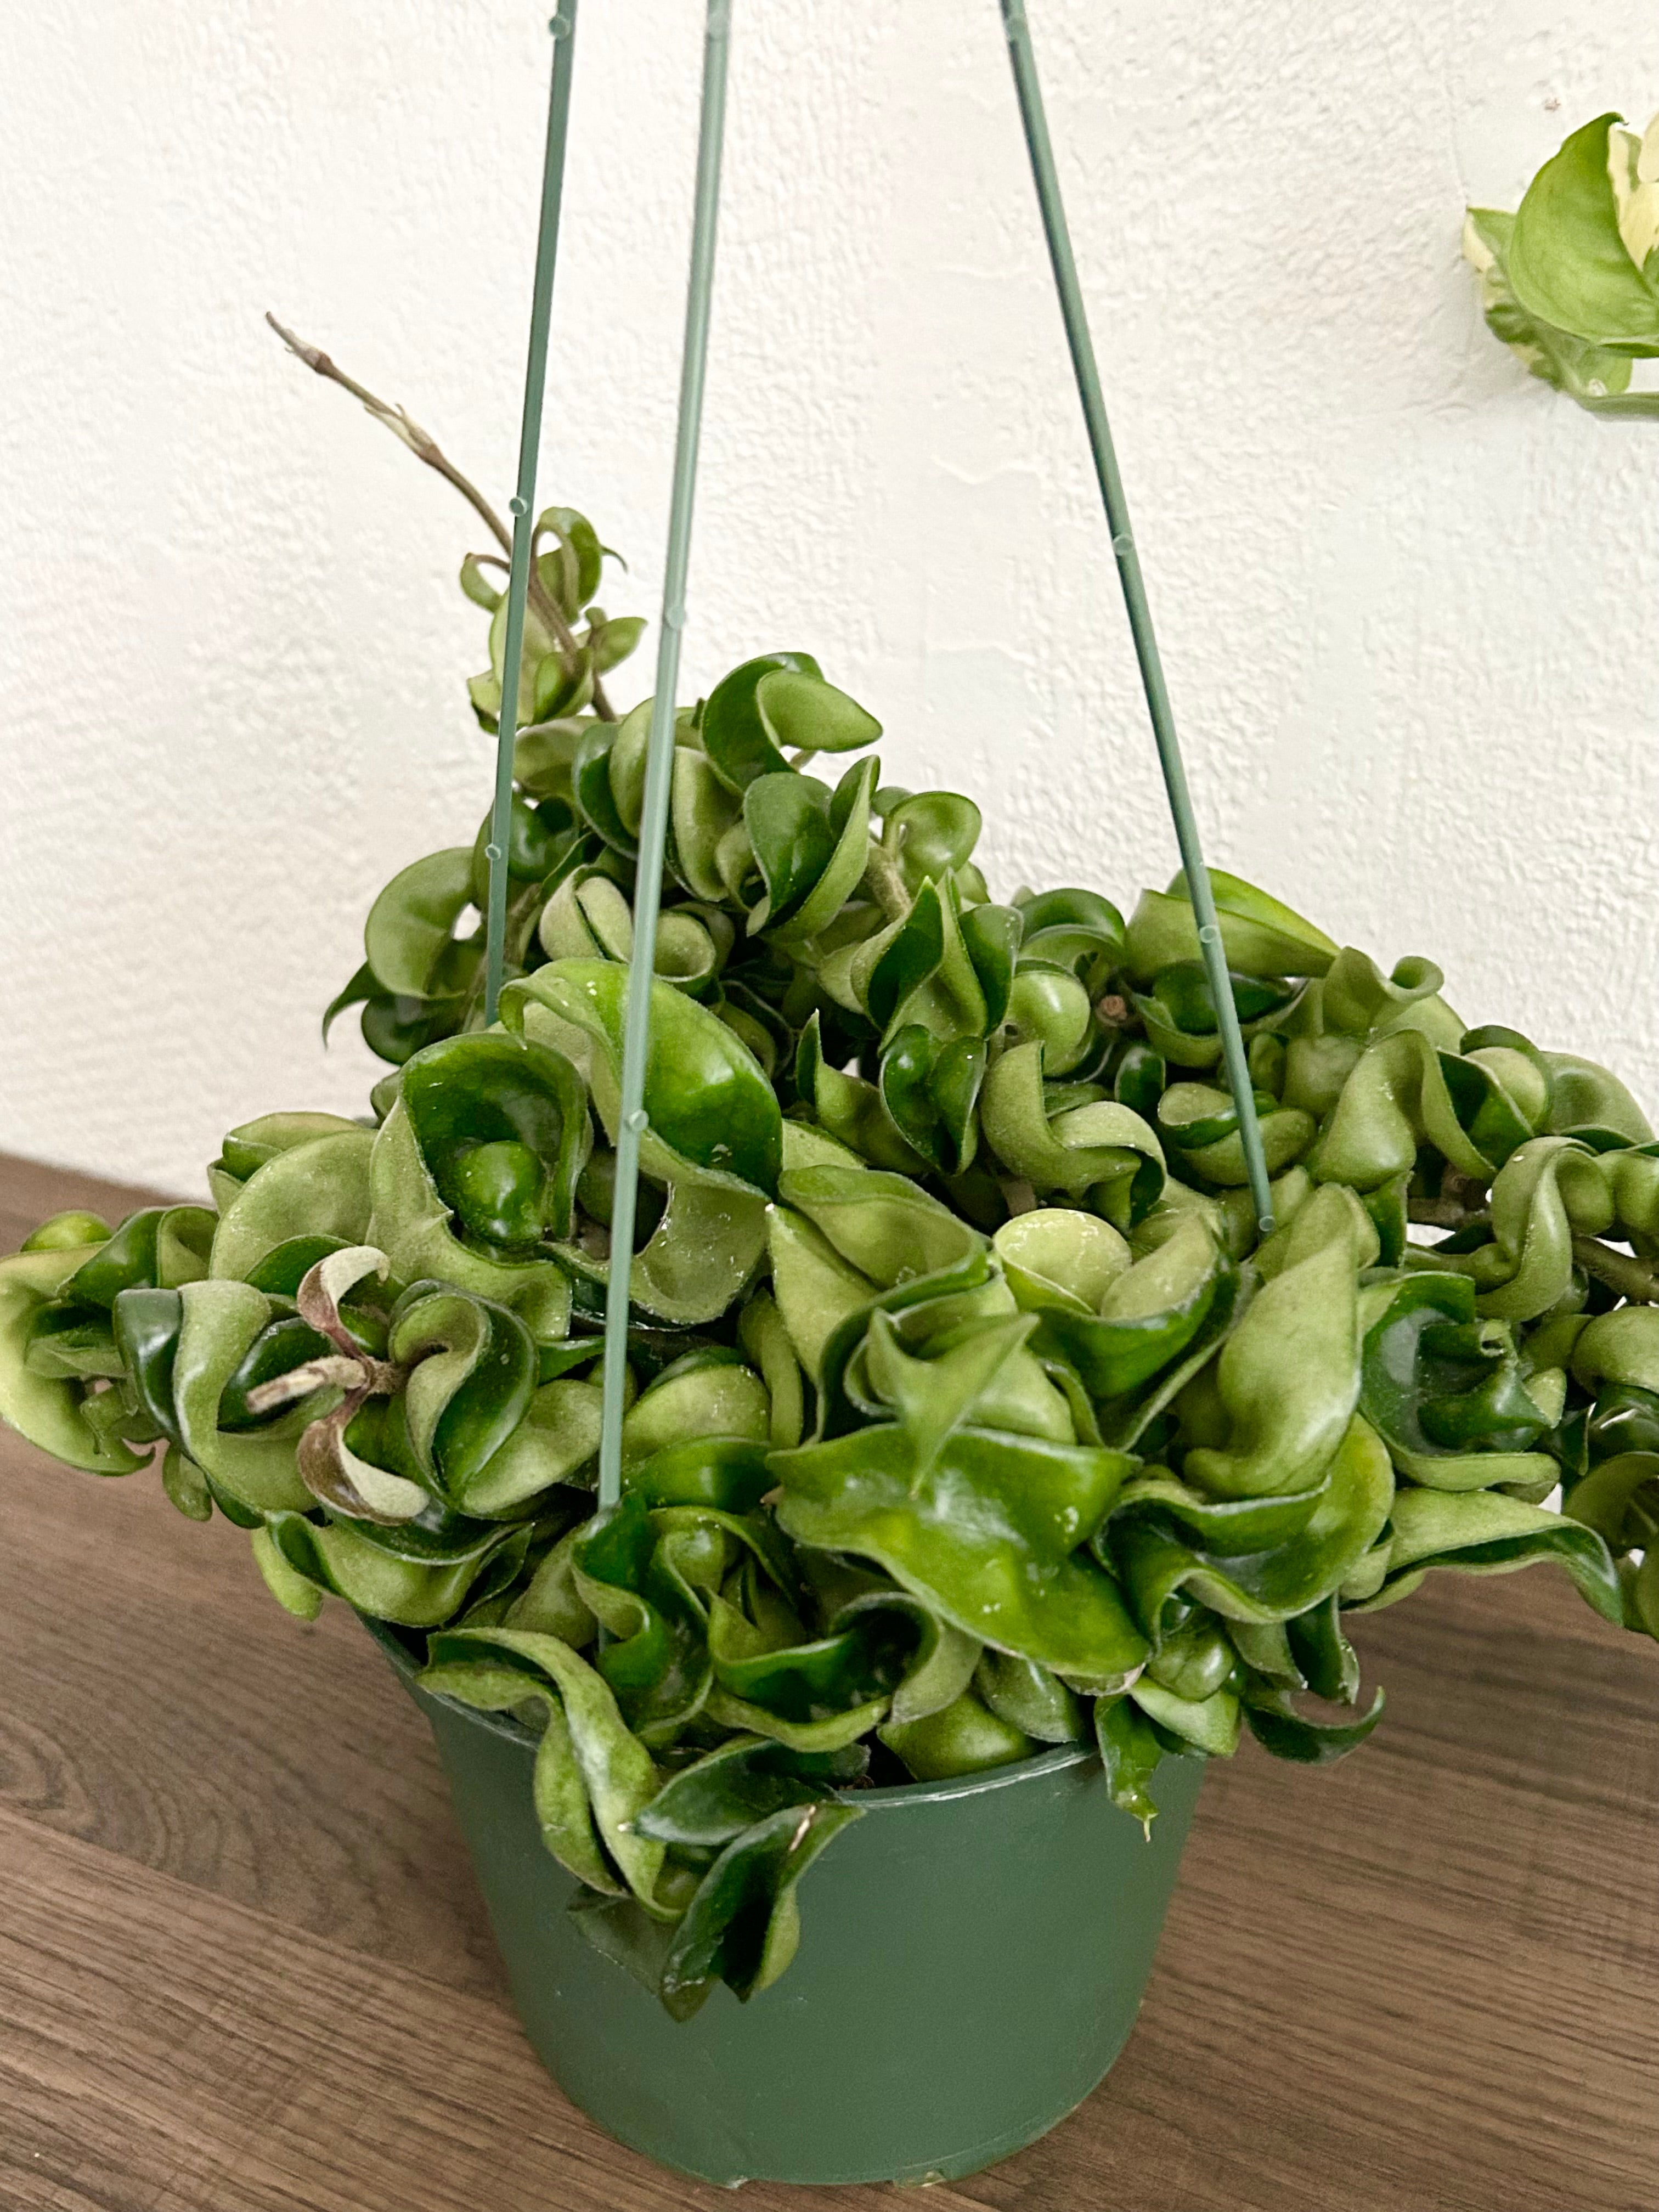 Hoya Compacta “Hindu Rope” House Plant - In 6” Hanging Plant